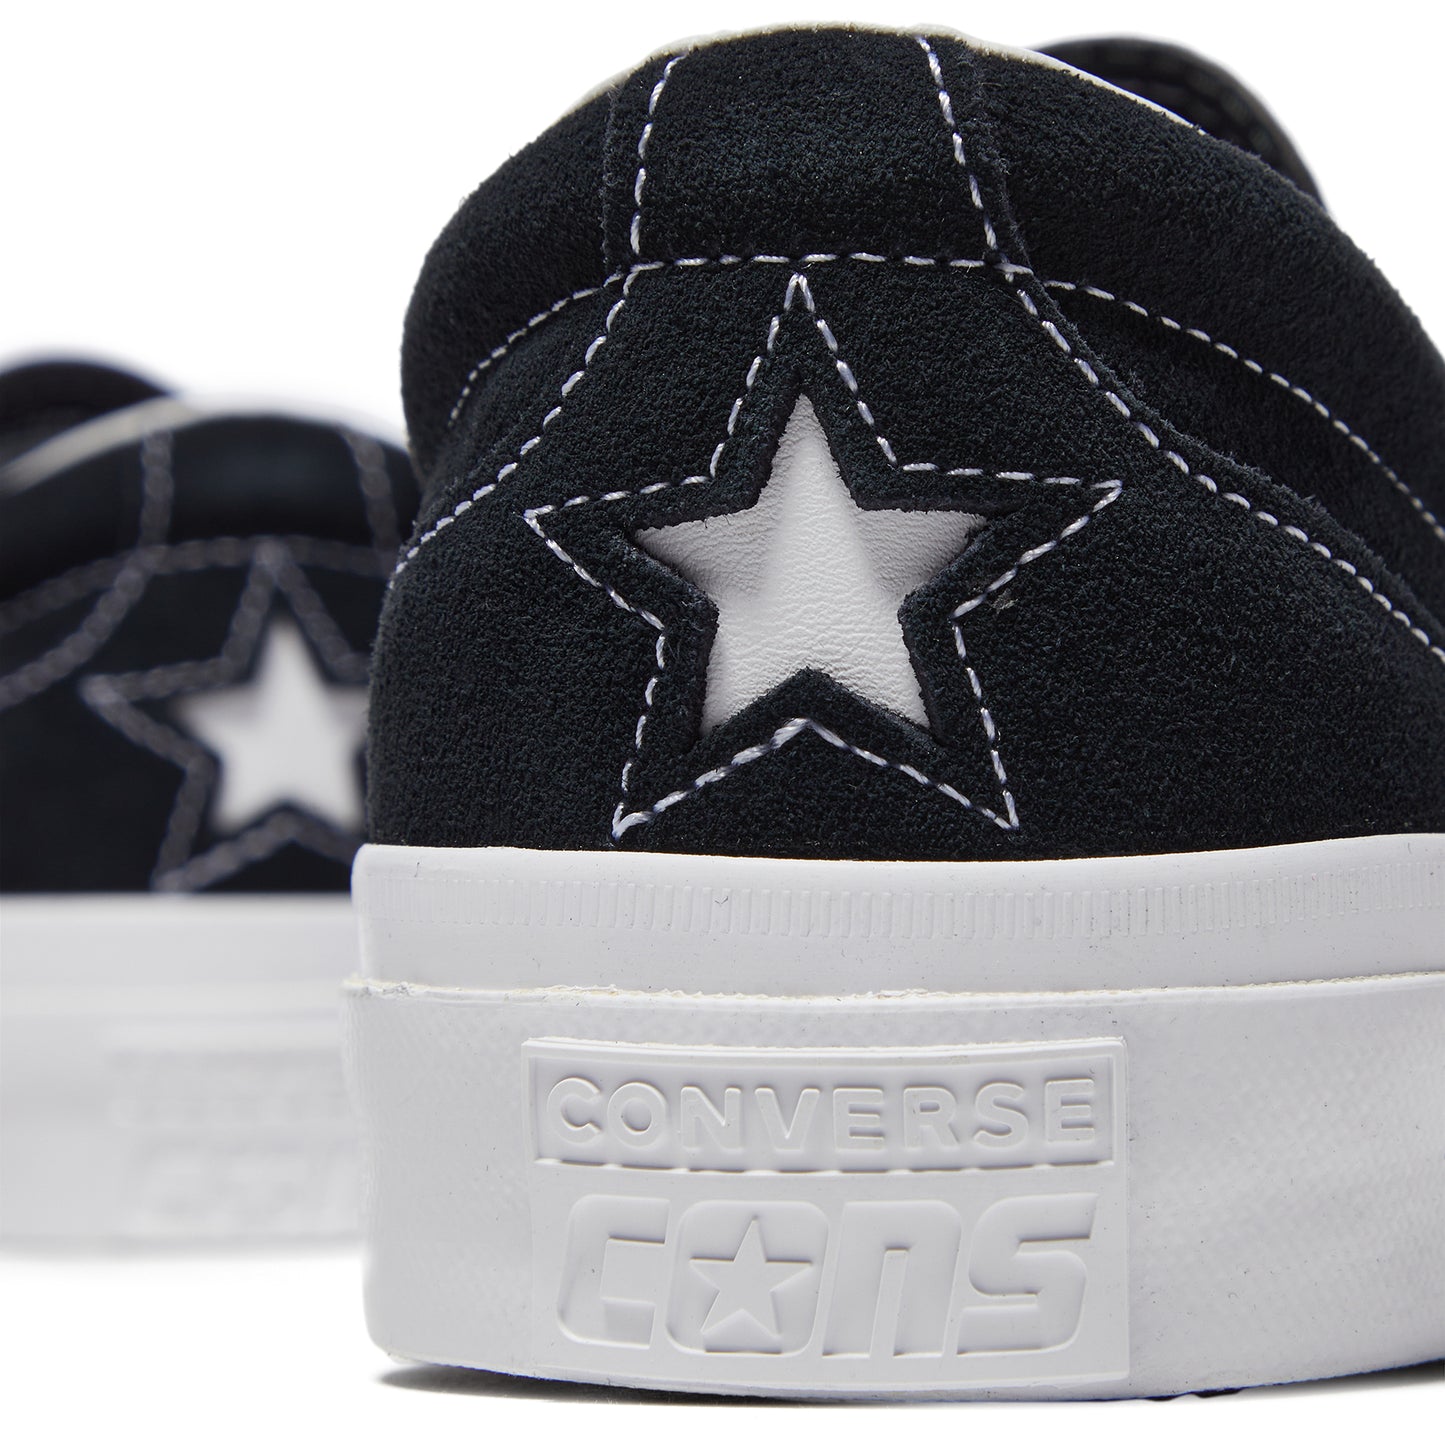 Converse One Star Slip Pro (Black/White)